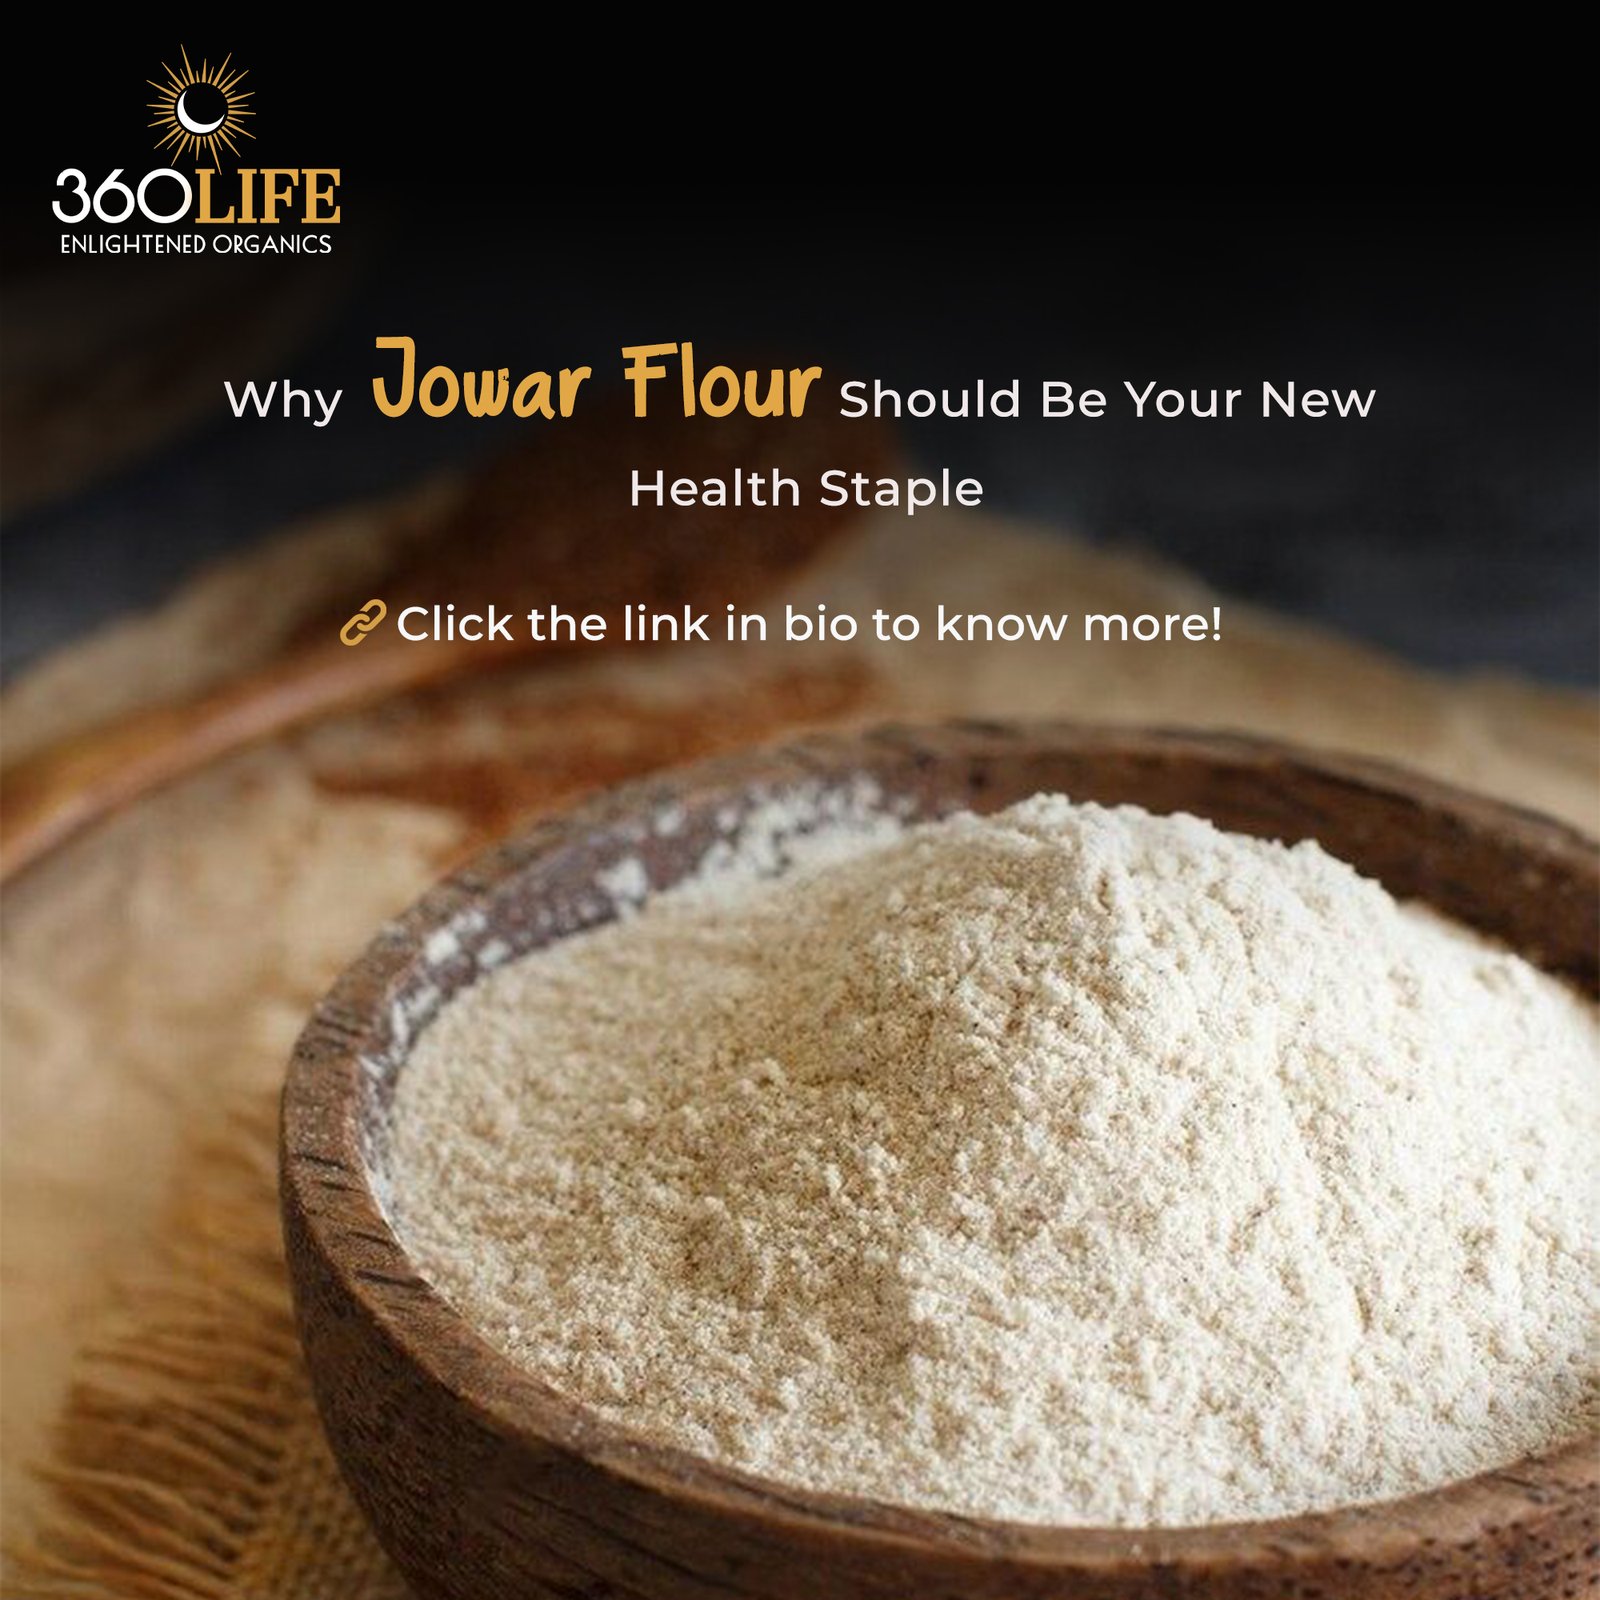 Why Jowar Flour Should Be Your New Health Staple